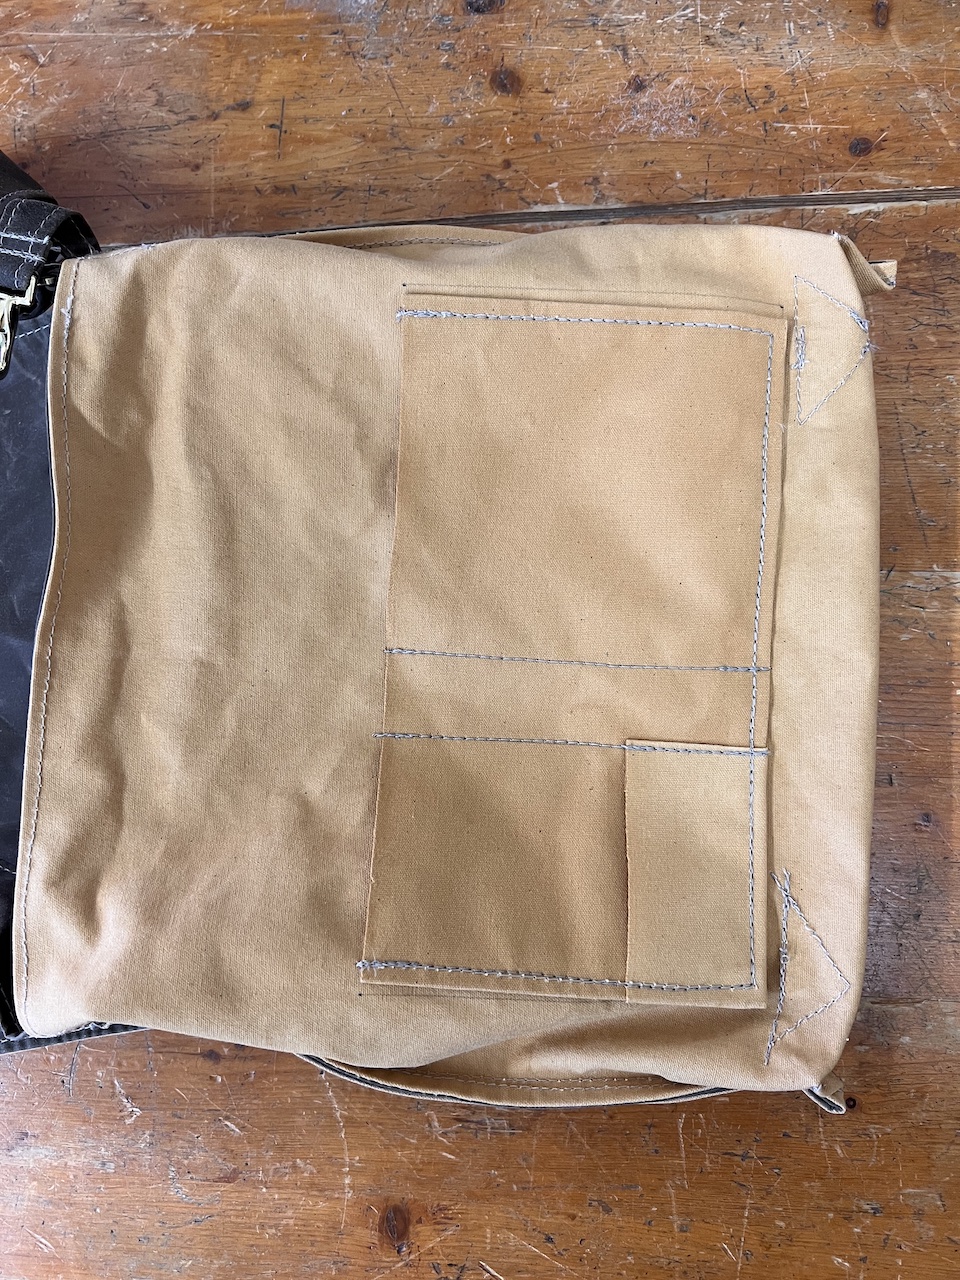 Inspo4thegirl's Shoulder bags Product Set on LTK